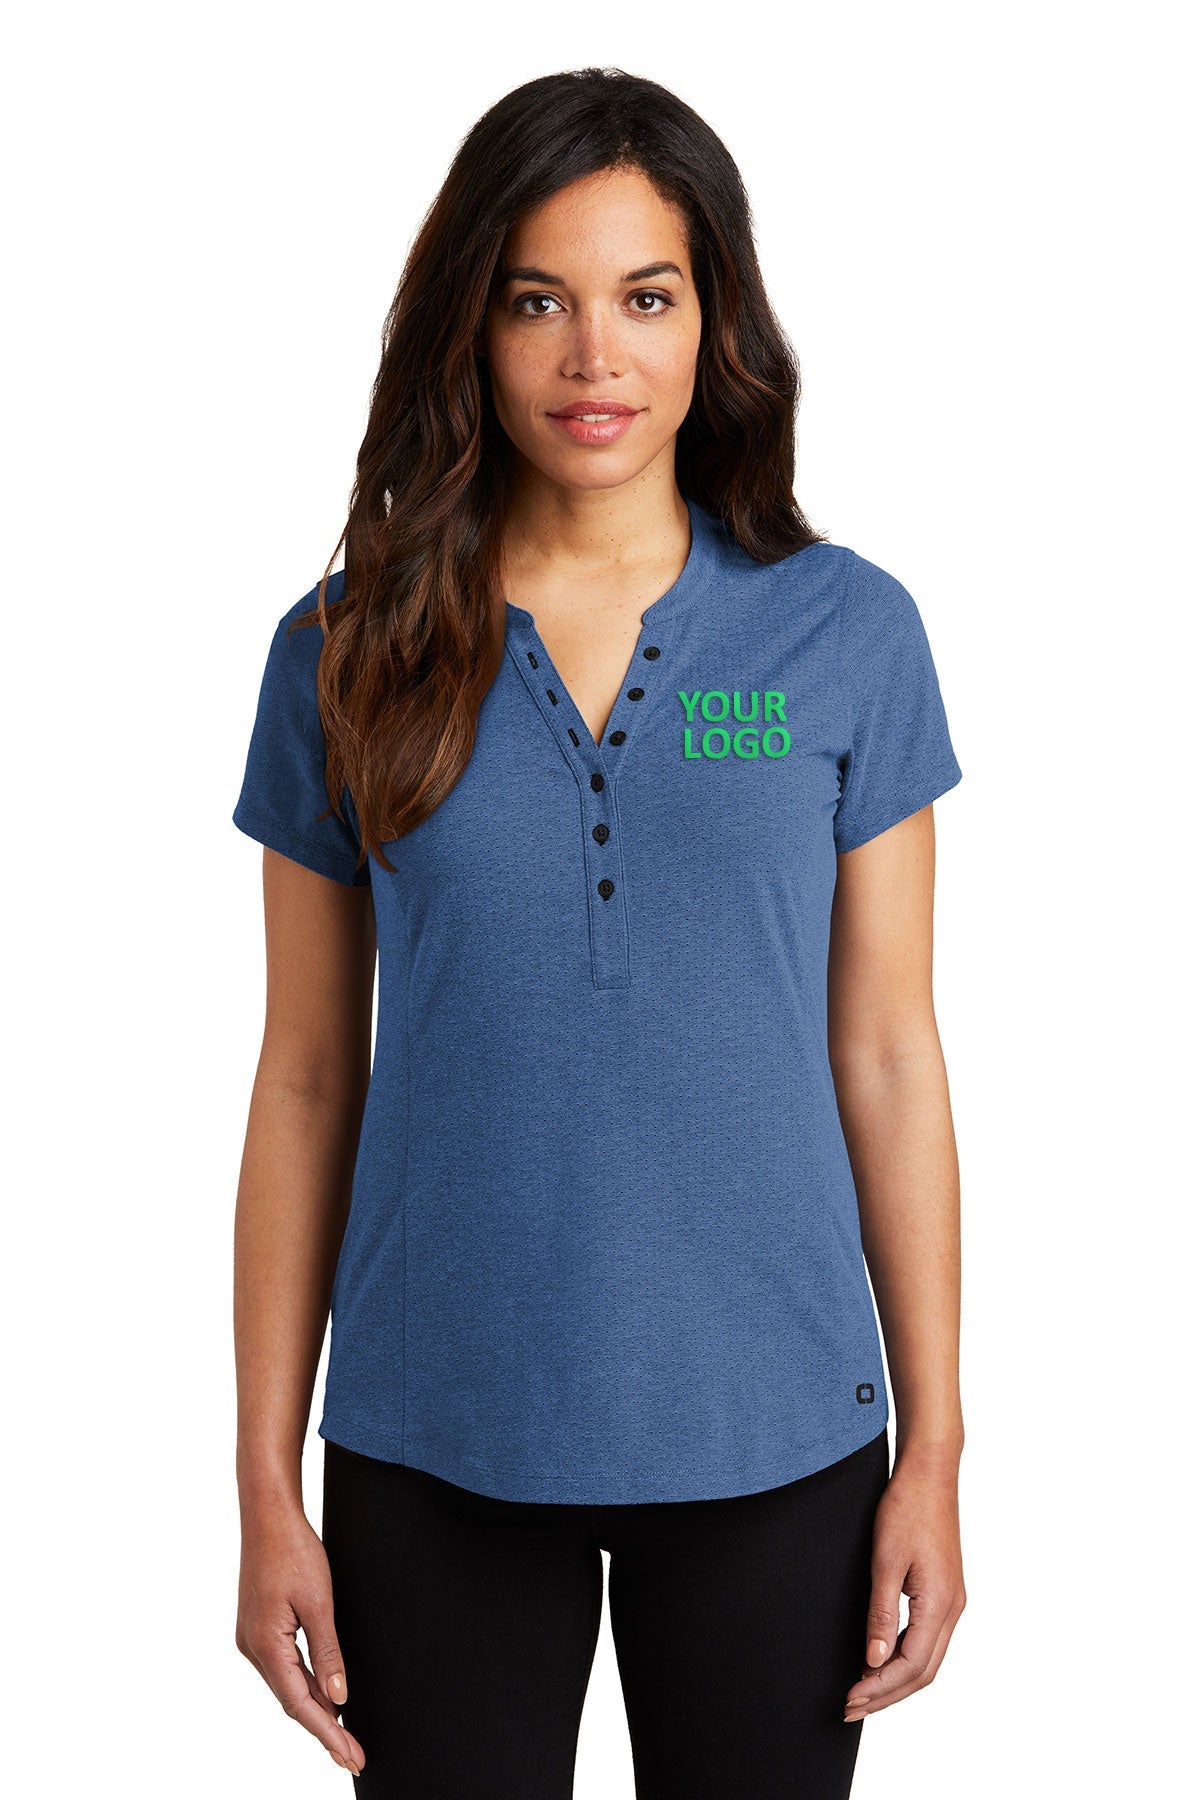 OGIO Blue Heather LOG136 polo shirts with custom logo